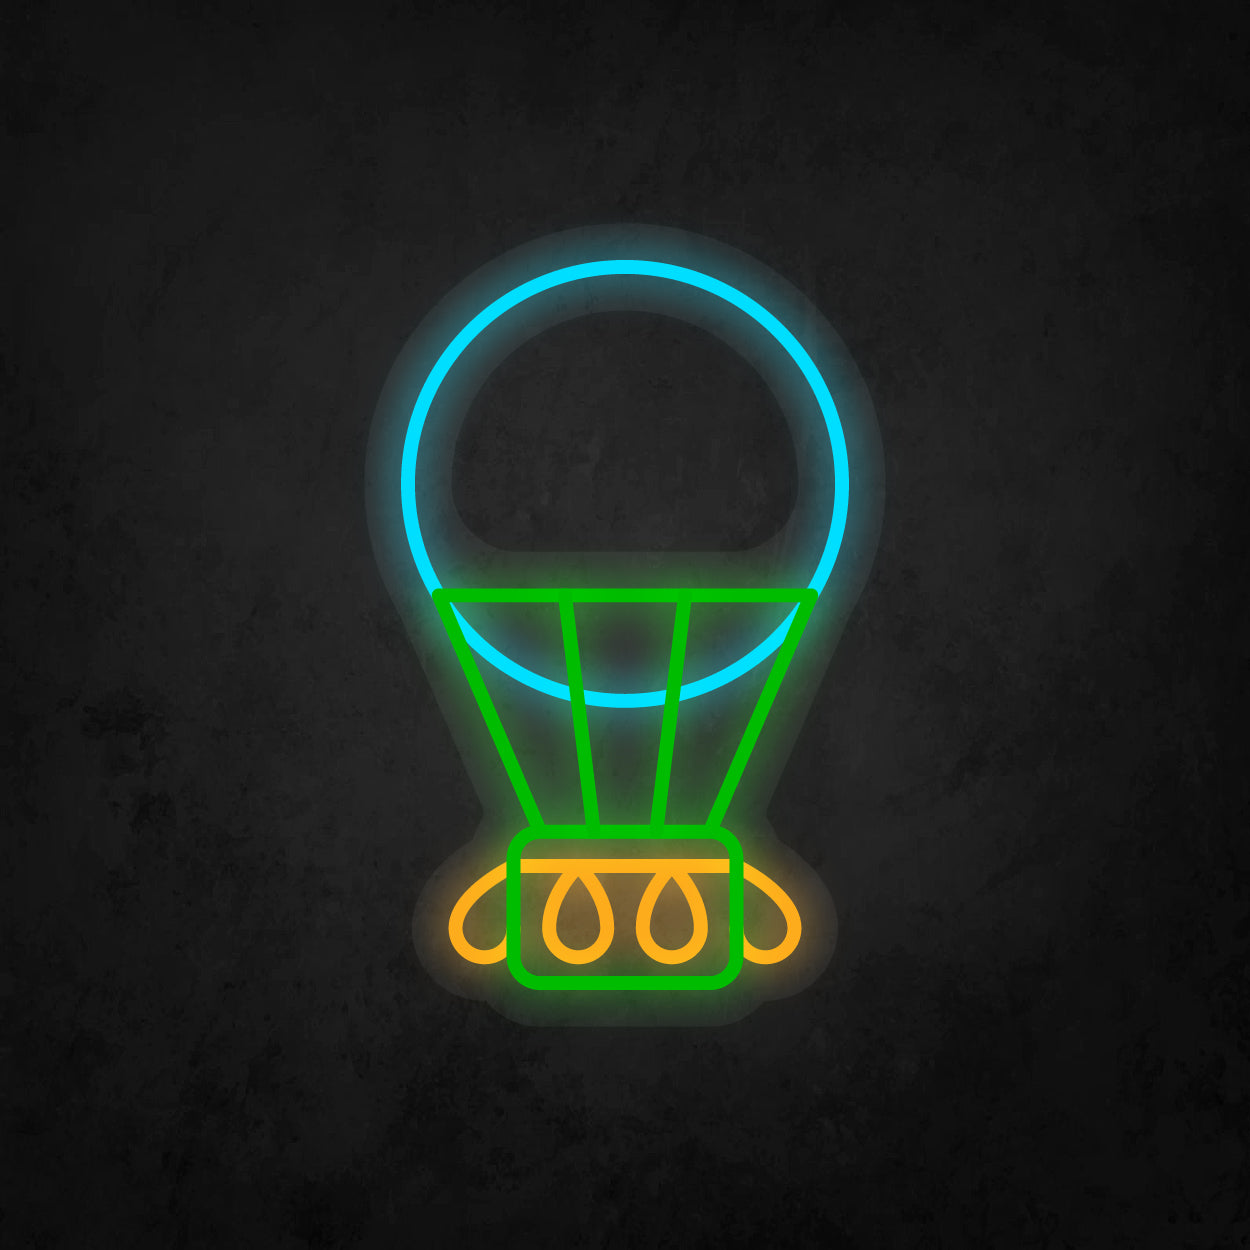 LED Neon Sign - Hot Air Balloon